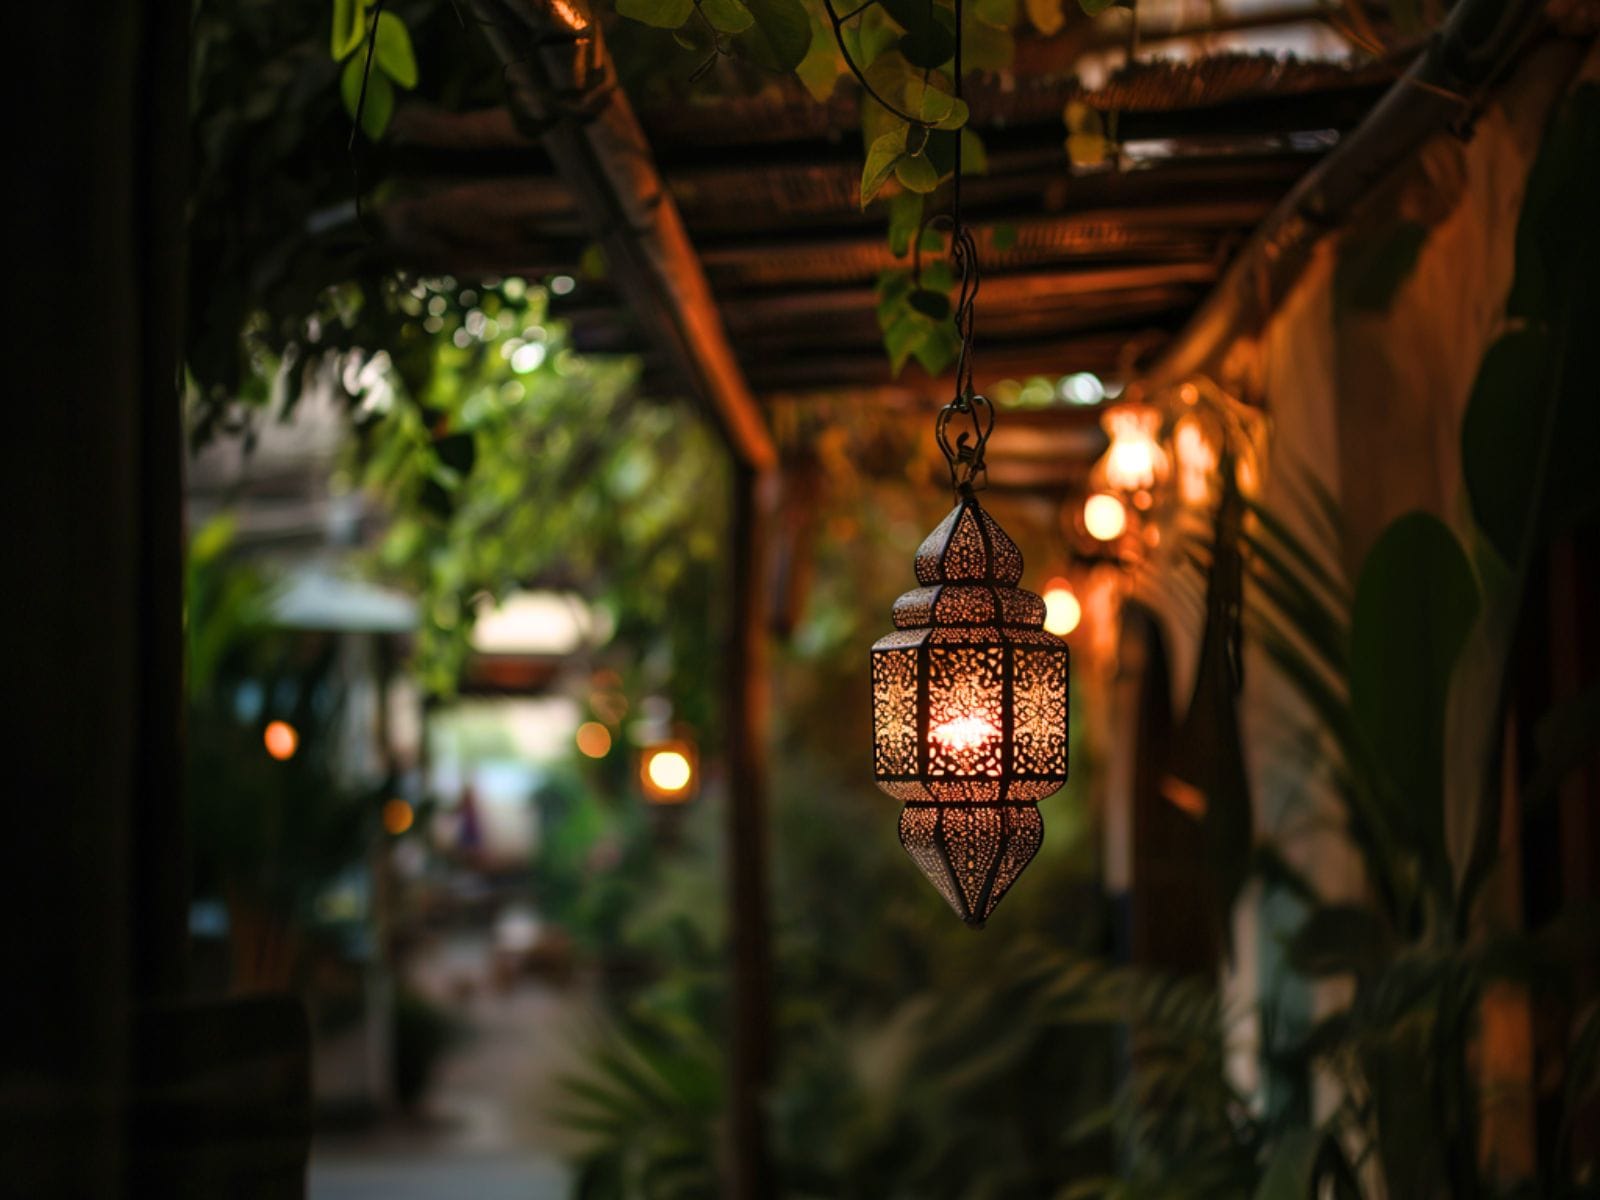 A Moroccan lantern hanging in a backyard